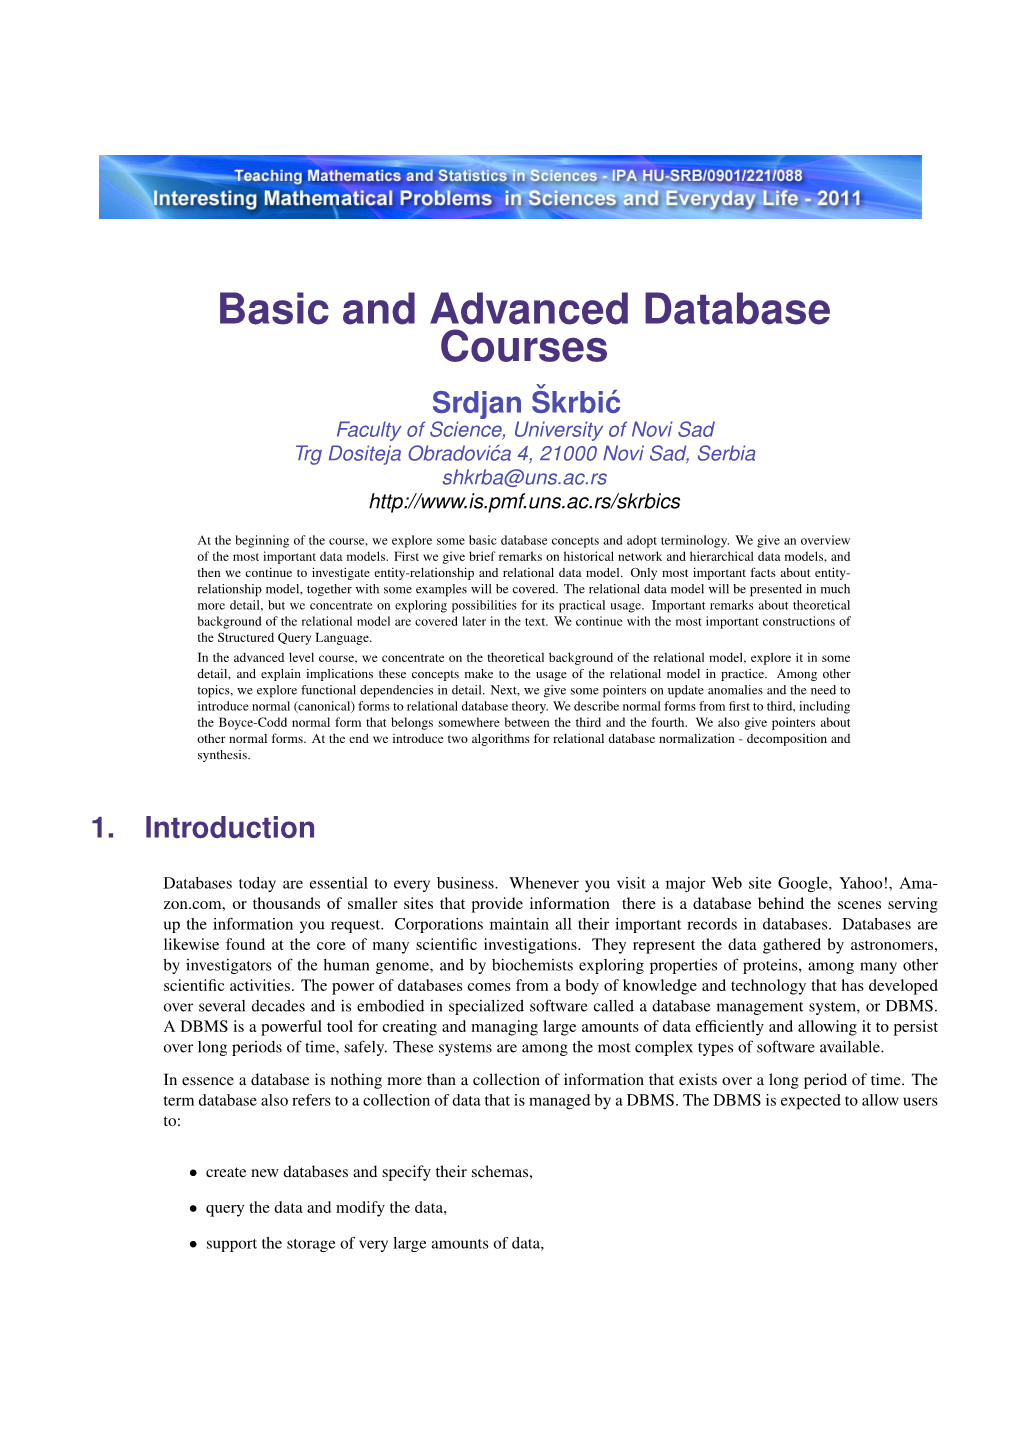 Basic and Advanced Database Courses